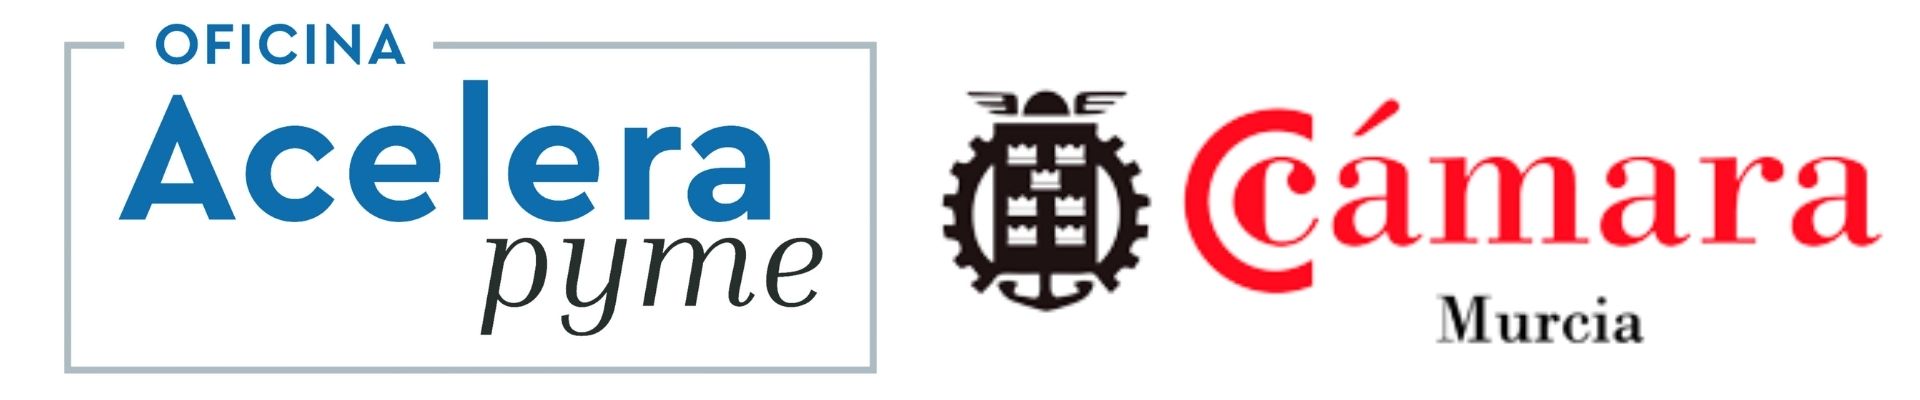 Oficina Acelera Pyme de la Cámara de Comercio de Murcia | logos